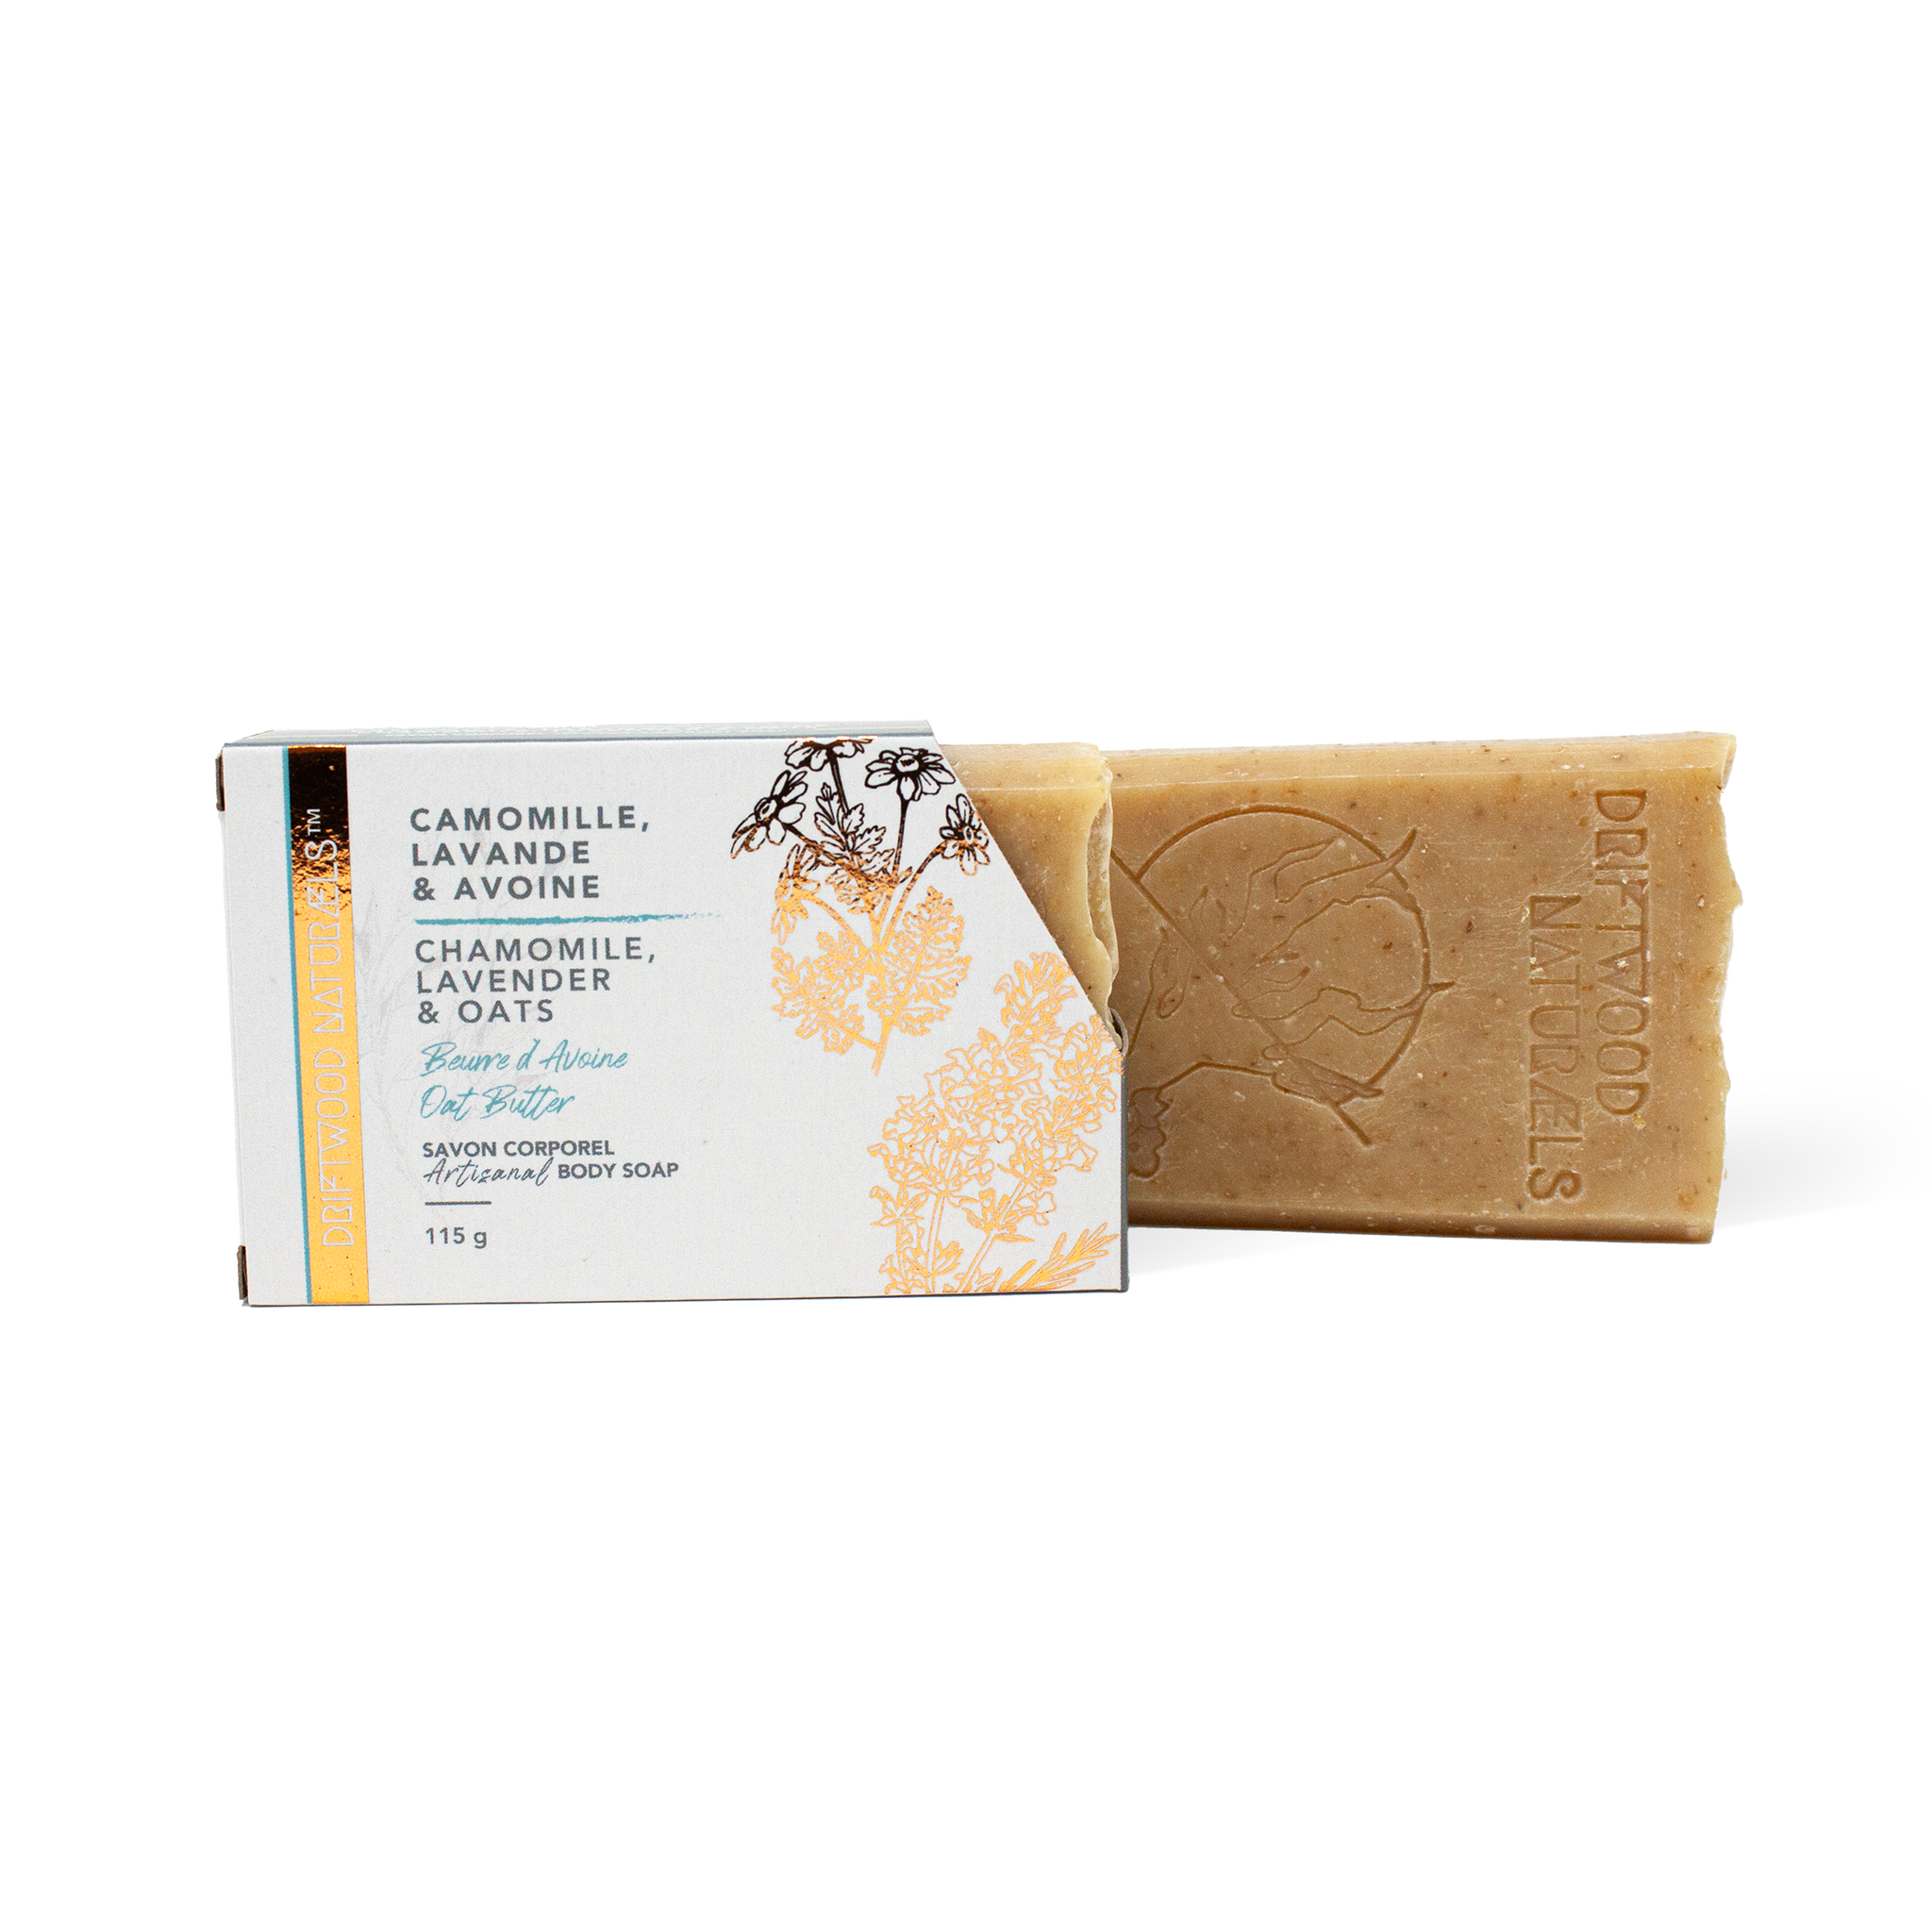 Chamomile, Lavender & Oats — Artisanal Body Soap